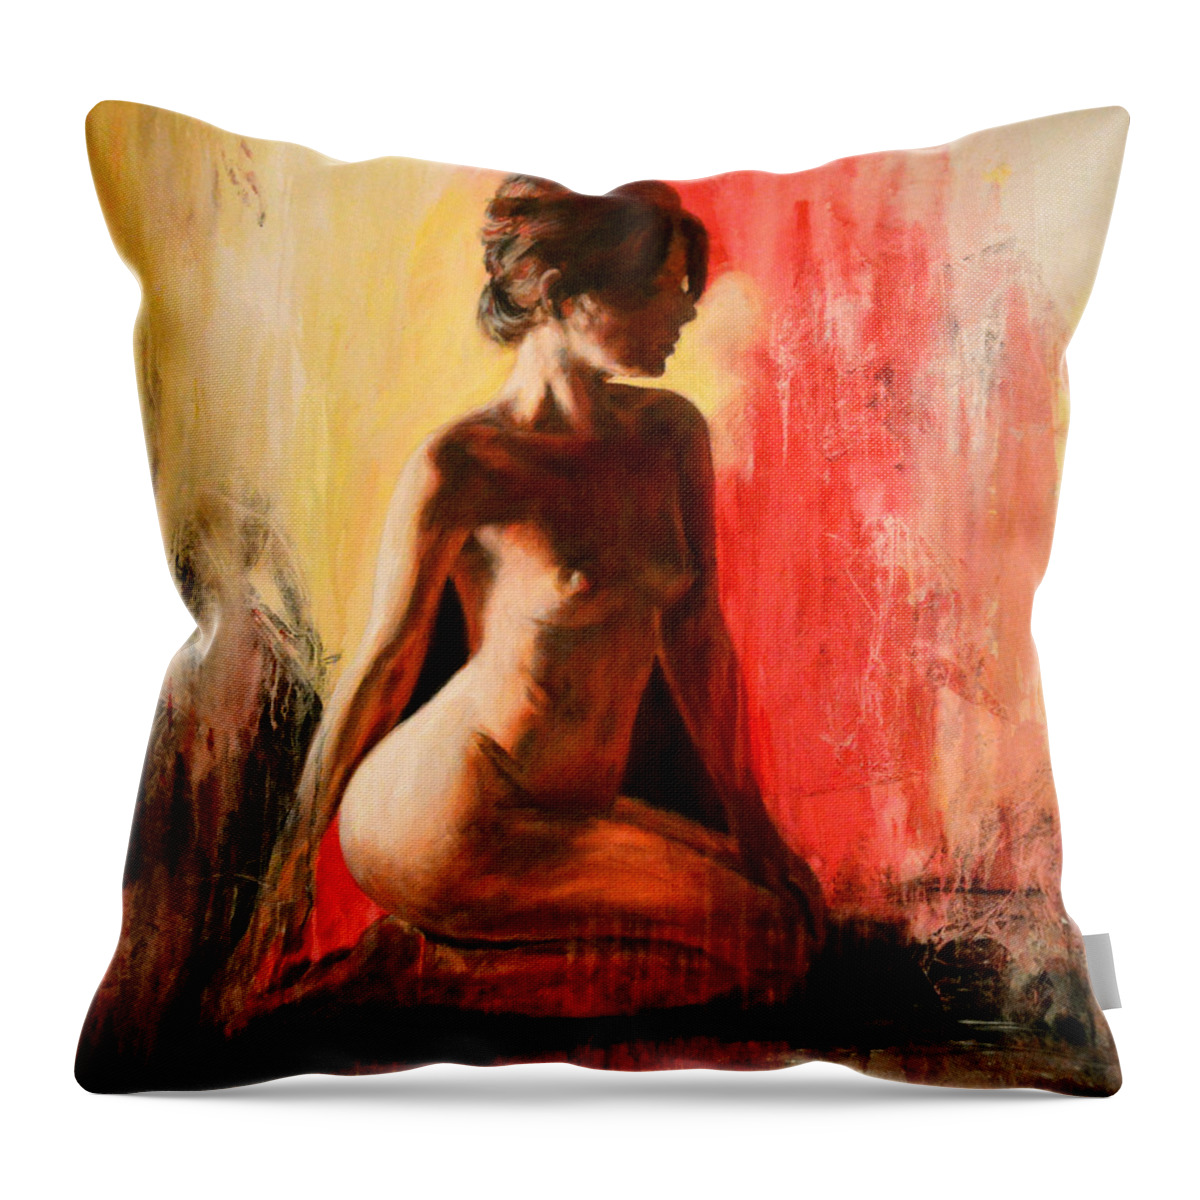 Nudes Throw Pillow featuring the painting Luminoso by Escha Van den bogerd